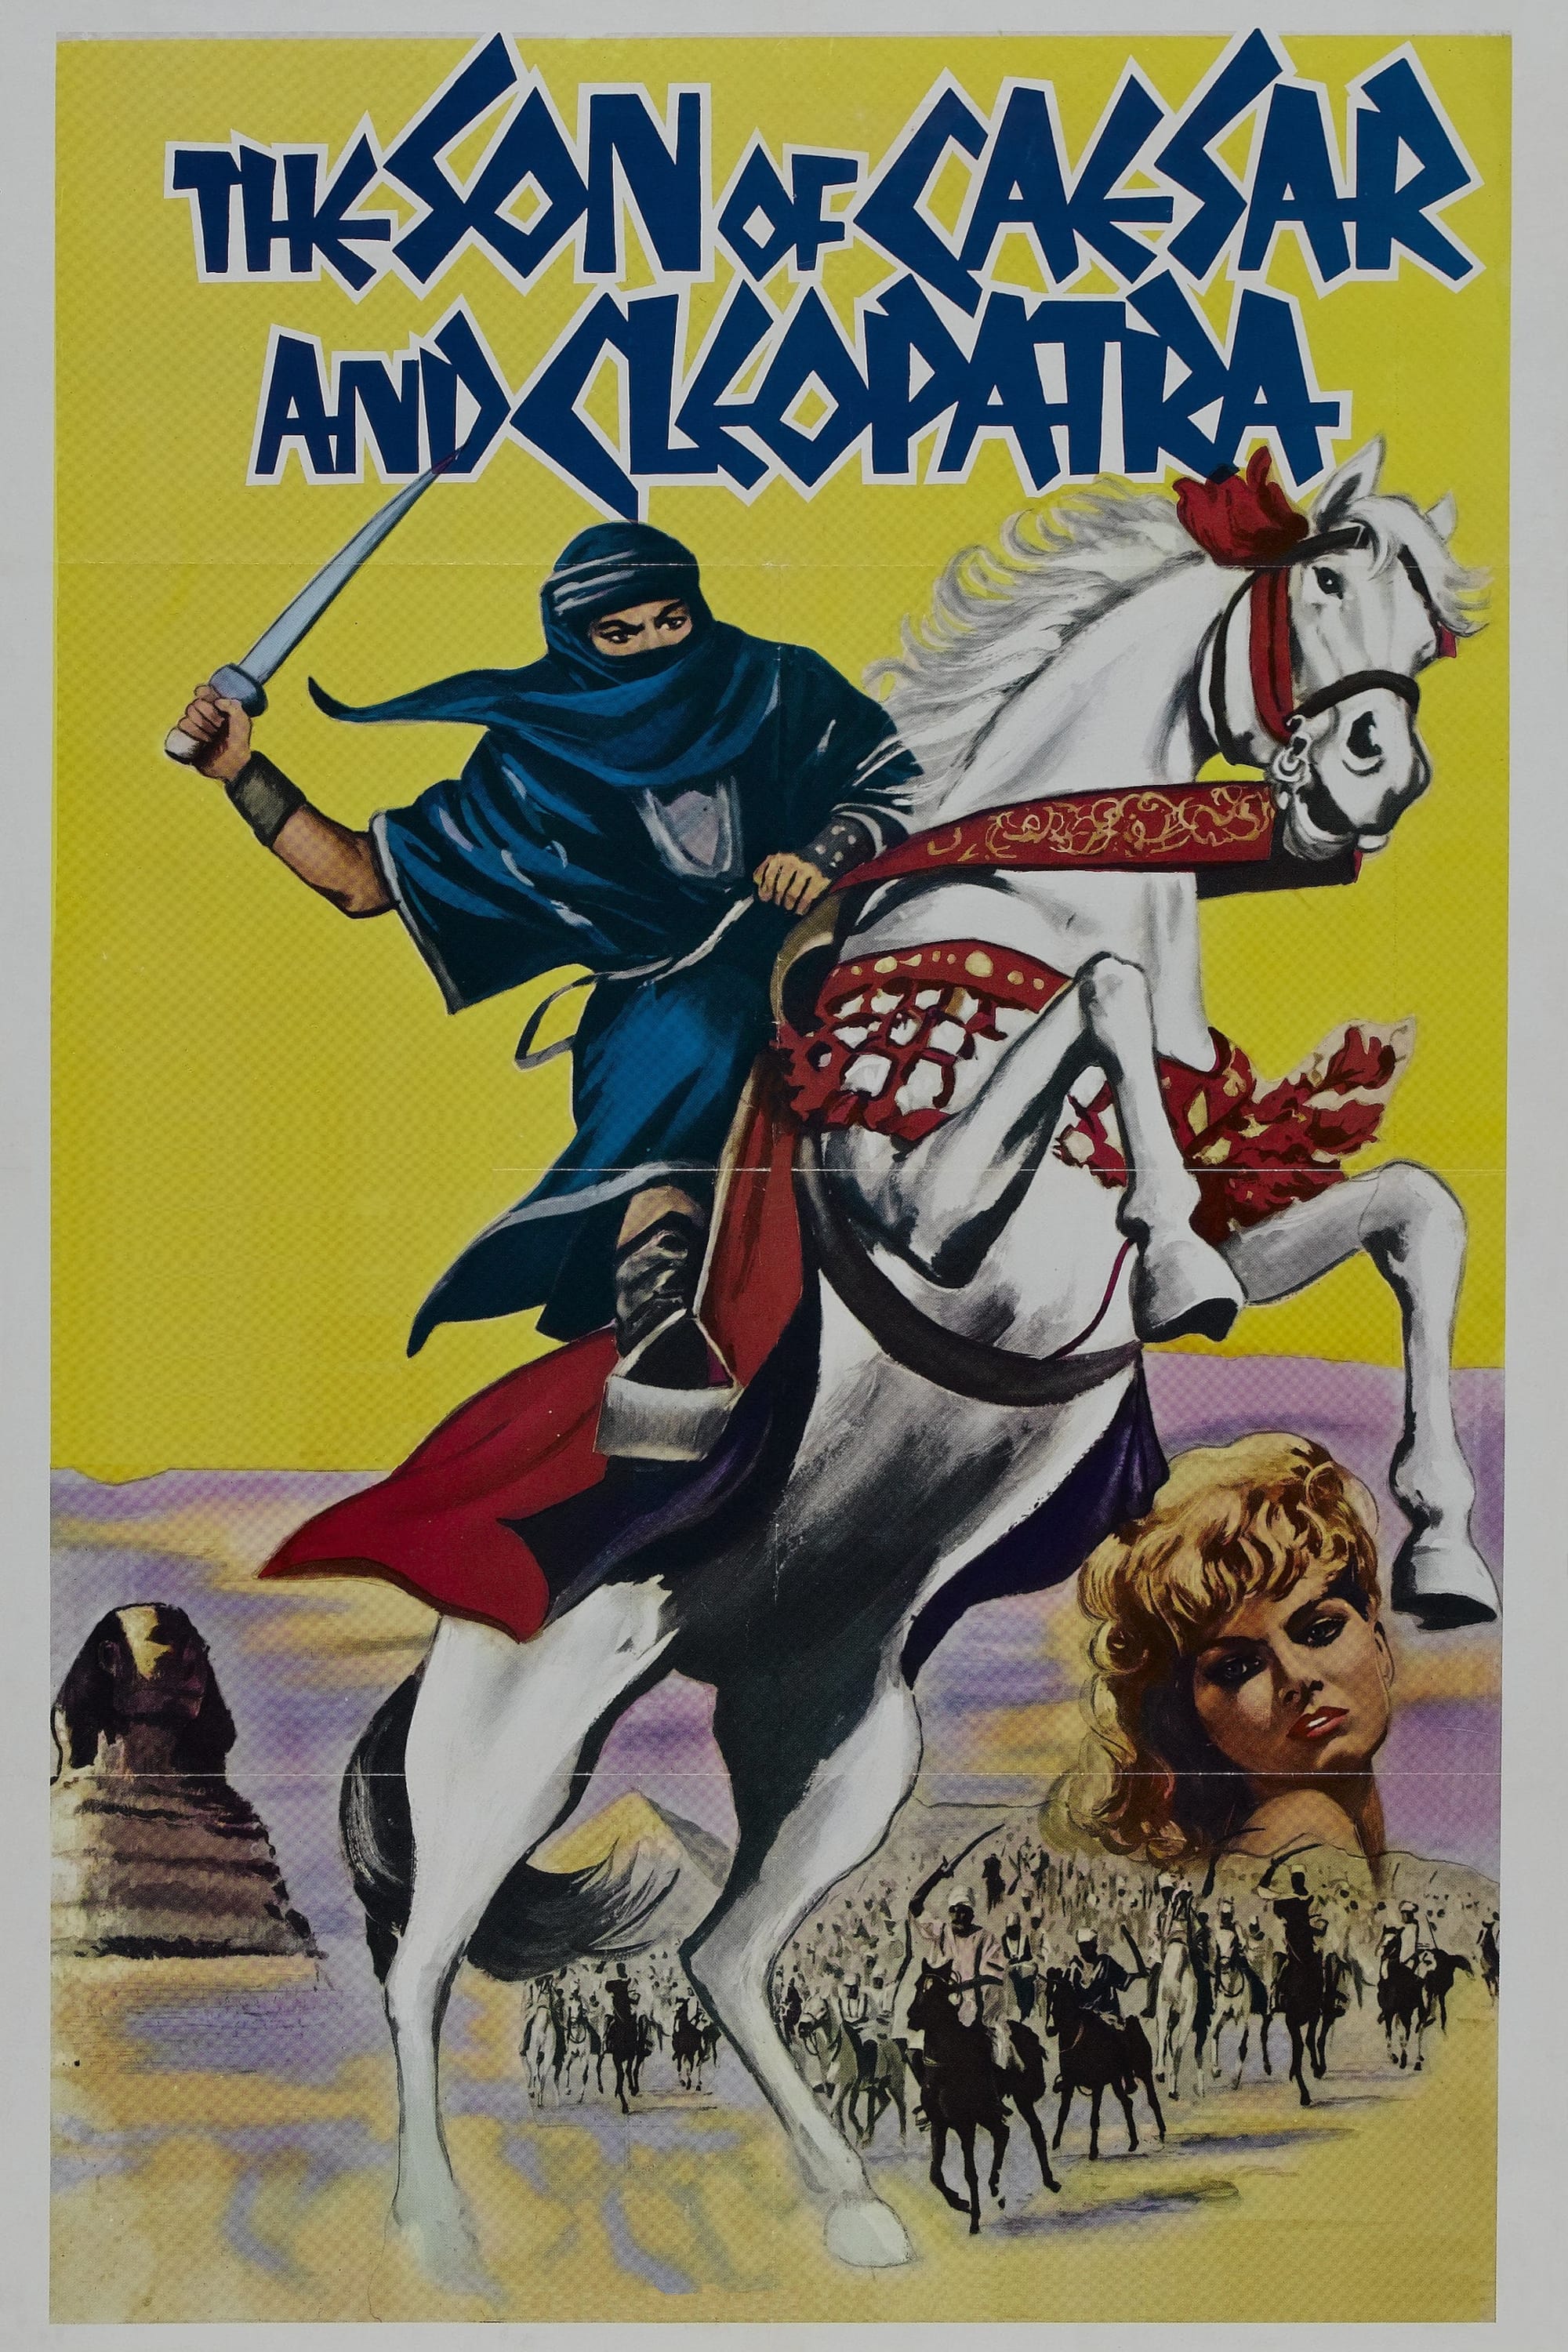 Son of Cleopatra (1964)